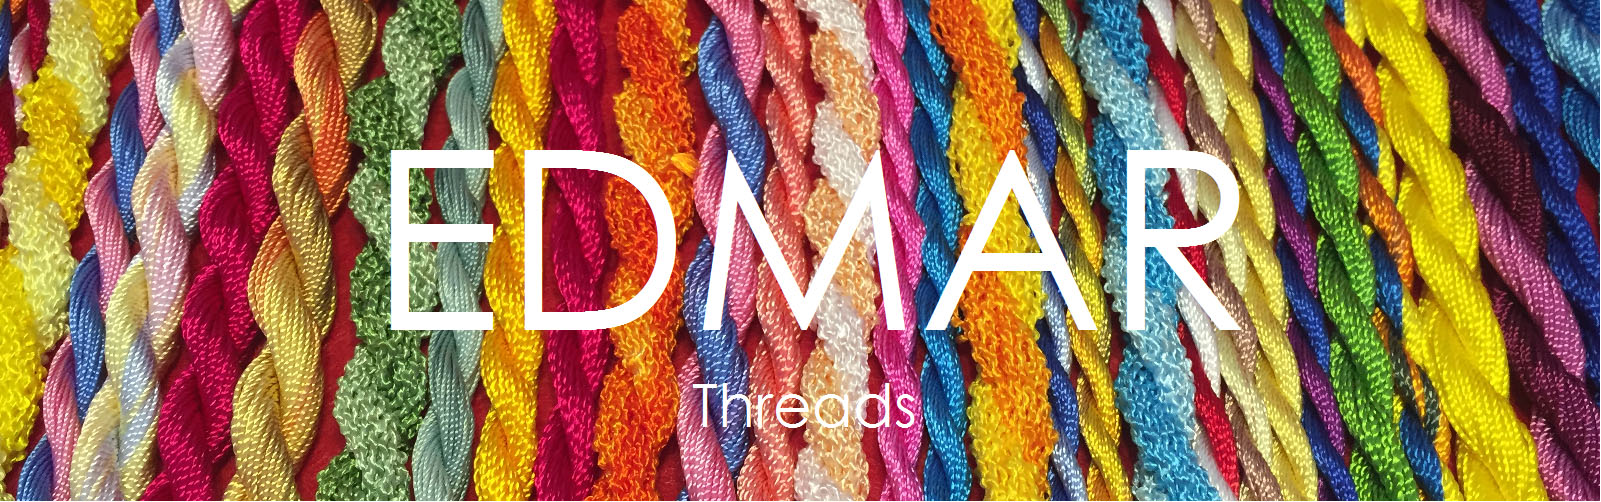 EdMar Threads